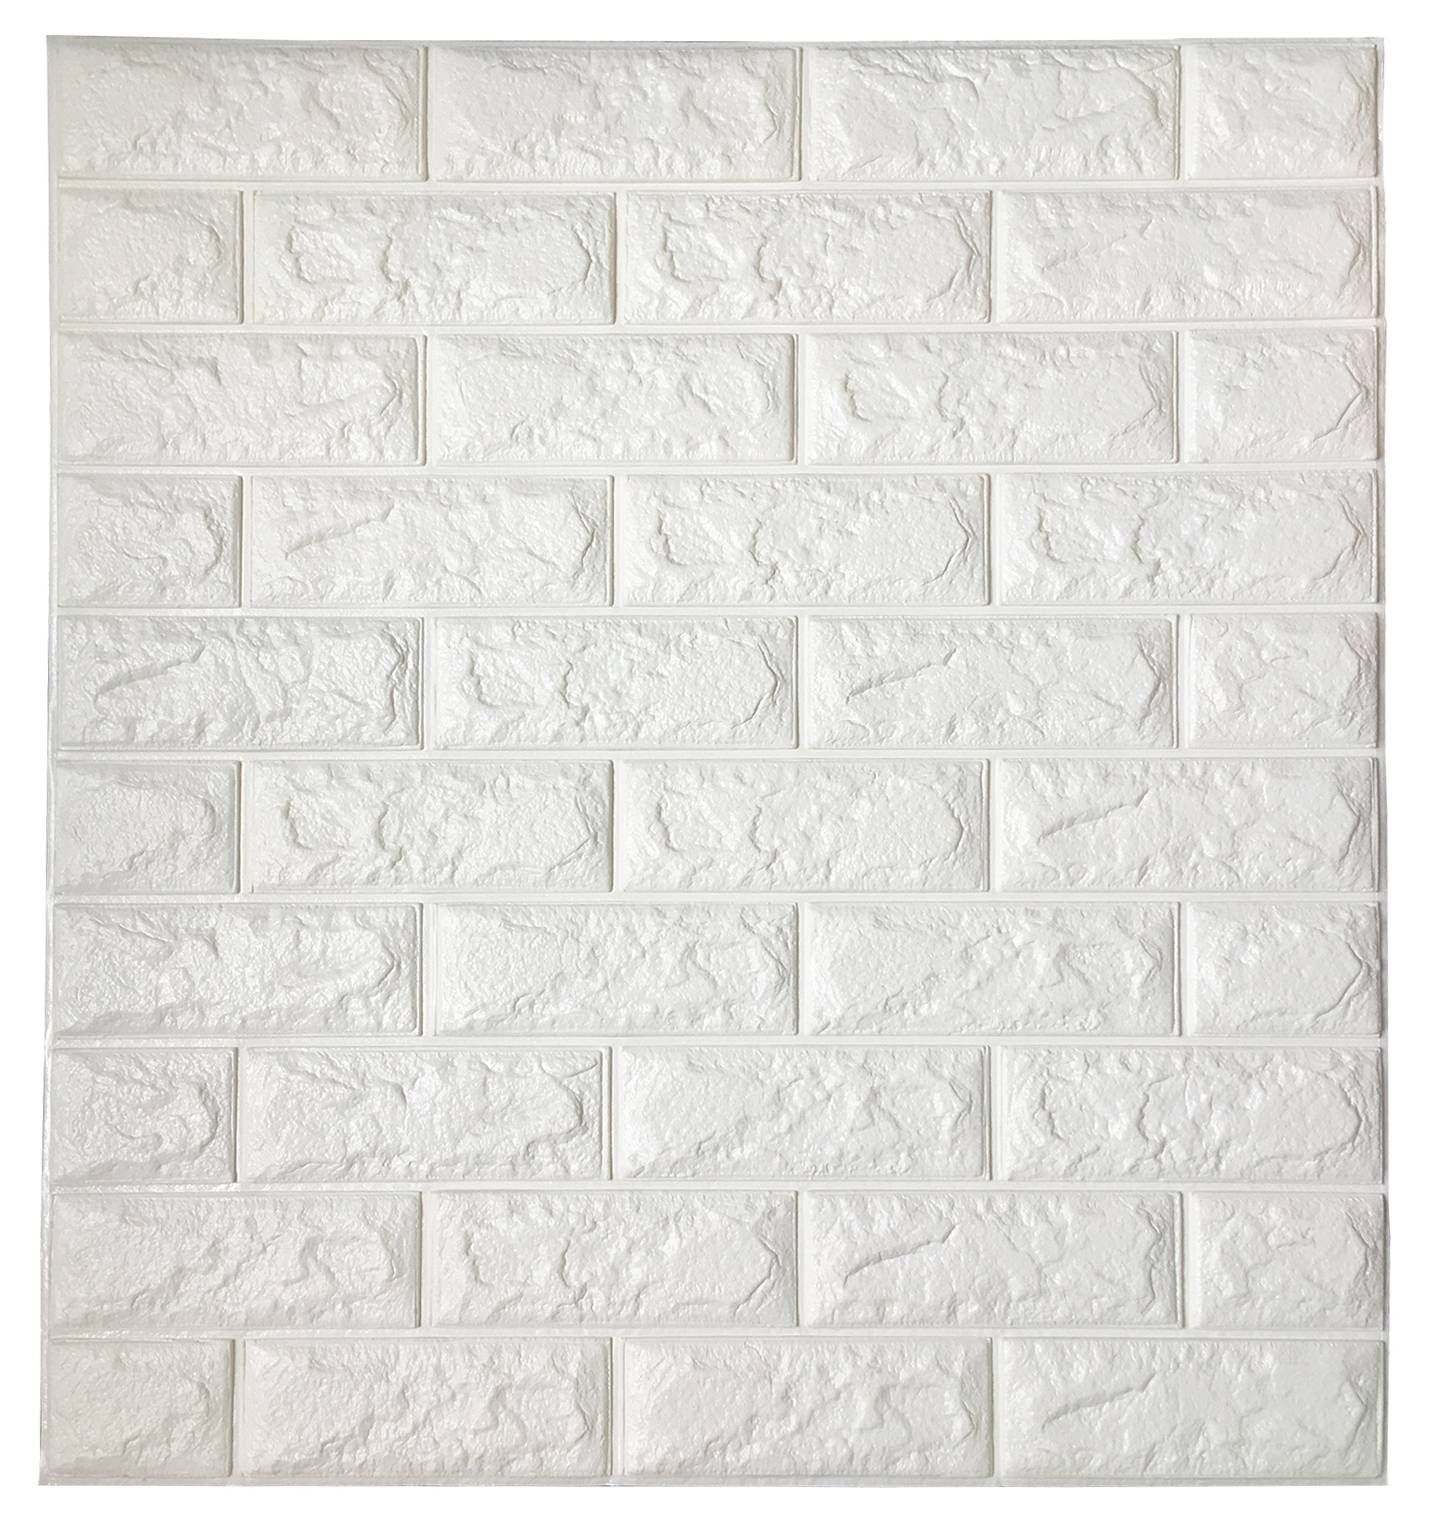 3d Wall Panels | 3d Wall Tiles | 3d Wall Art | 3d Wall Decor Pertaining To Newest Vidella 3d Wall Art (Gallery 19 of 20)